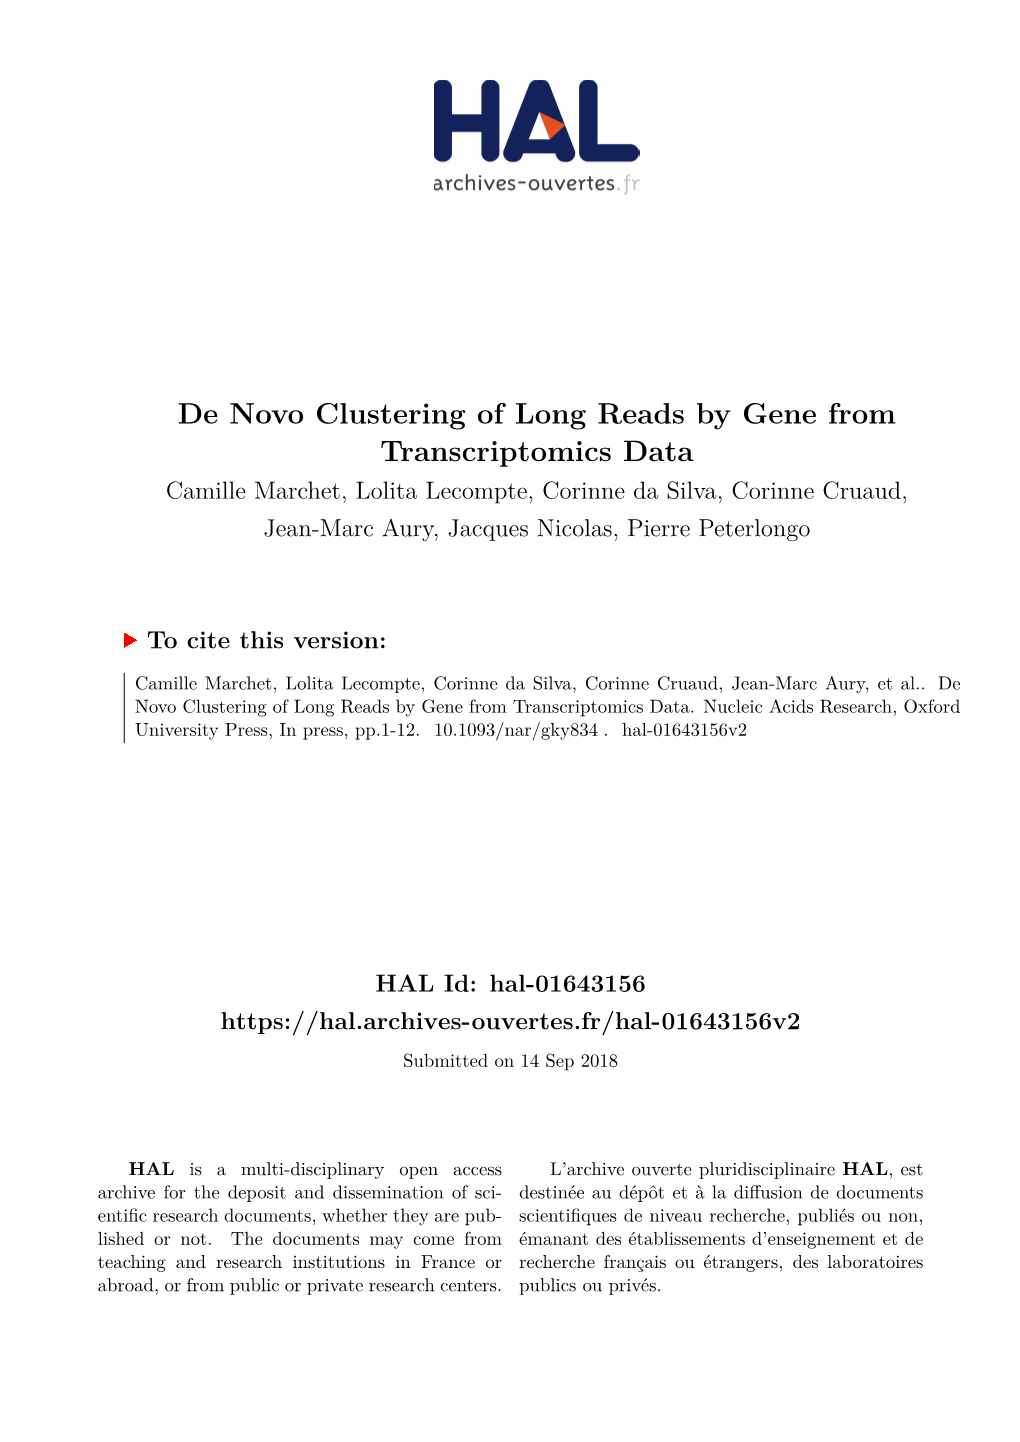 De Novo Clustering of Long Reads by Gene from Transcriptomics Data